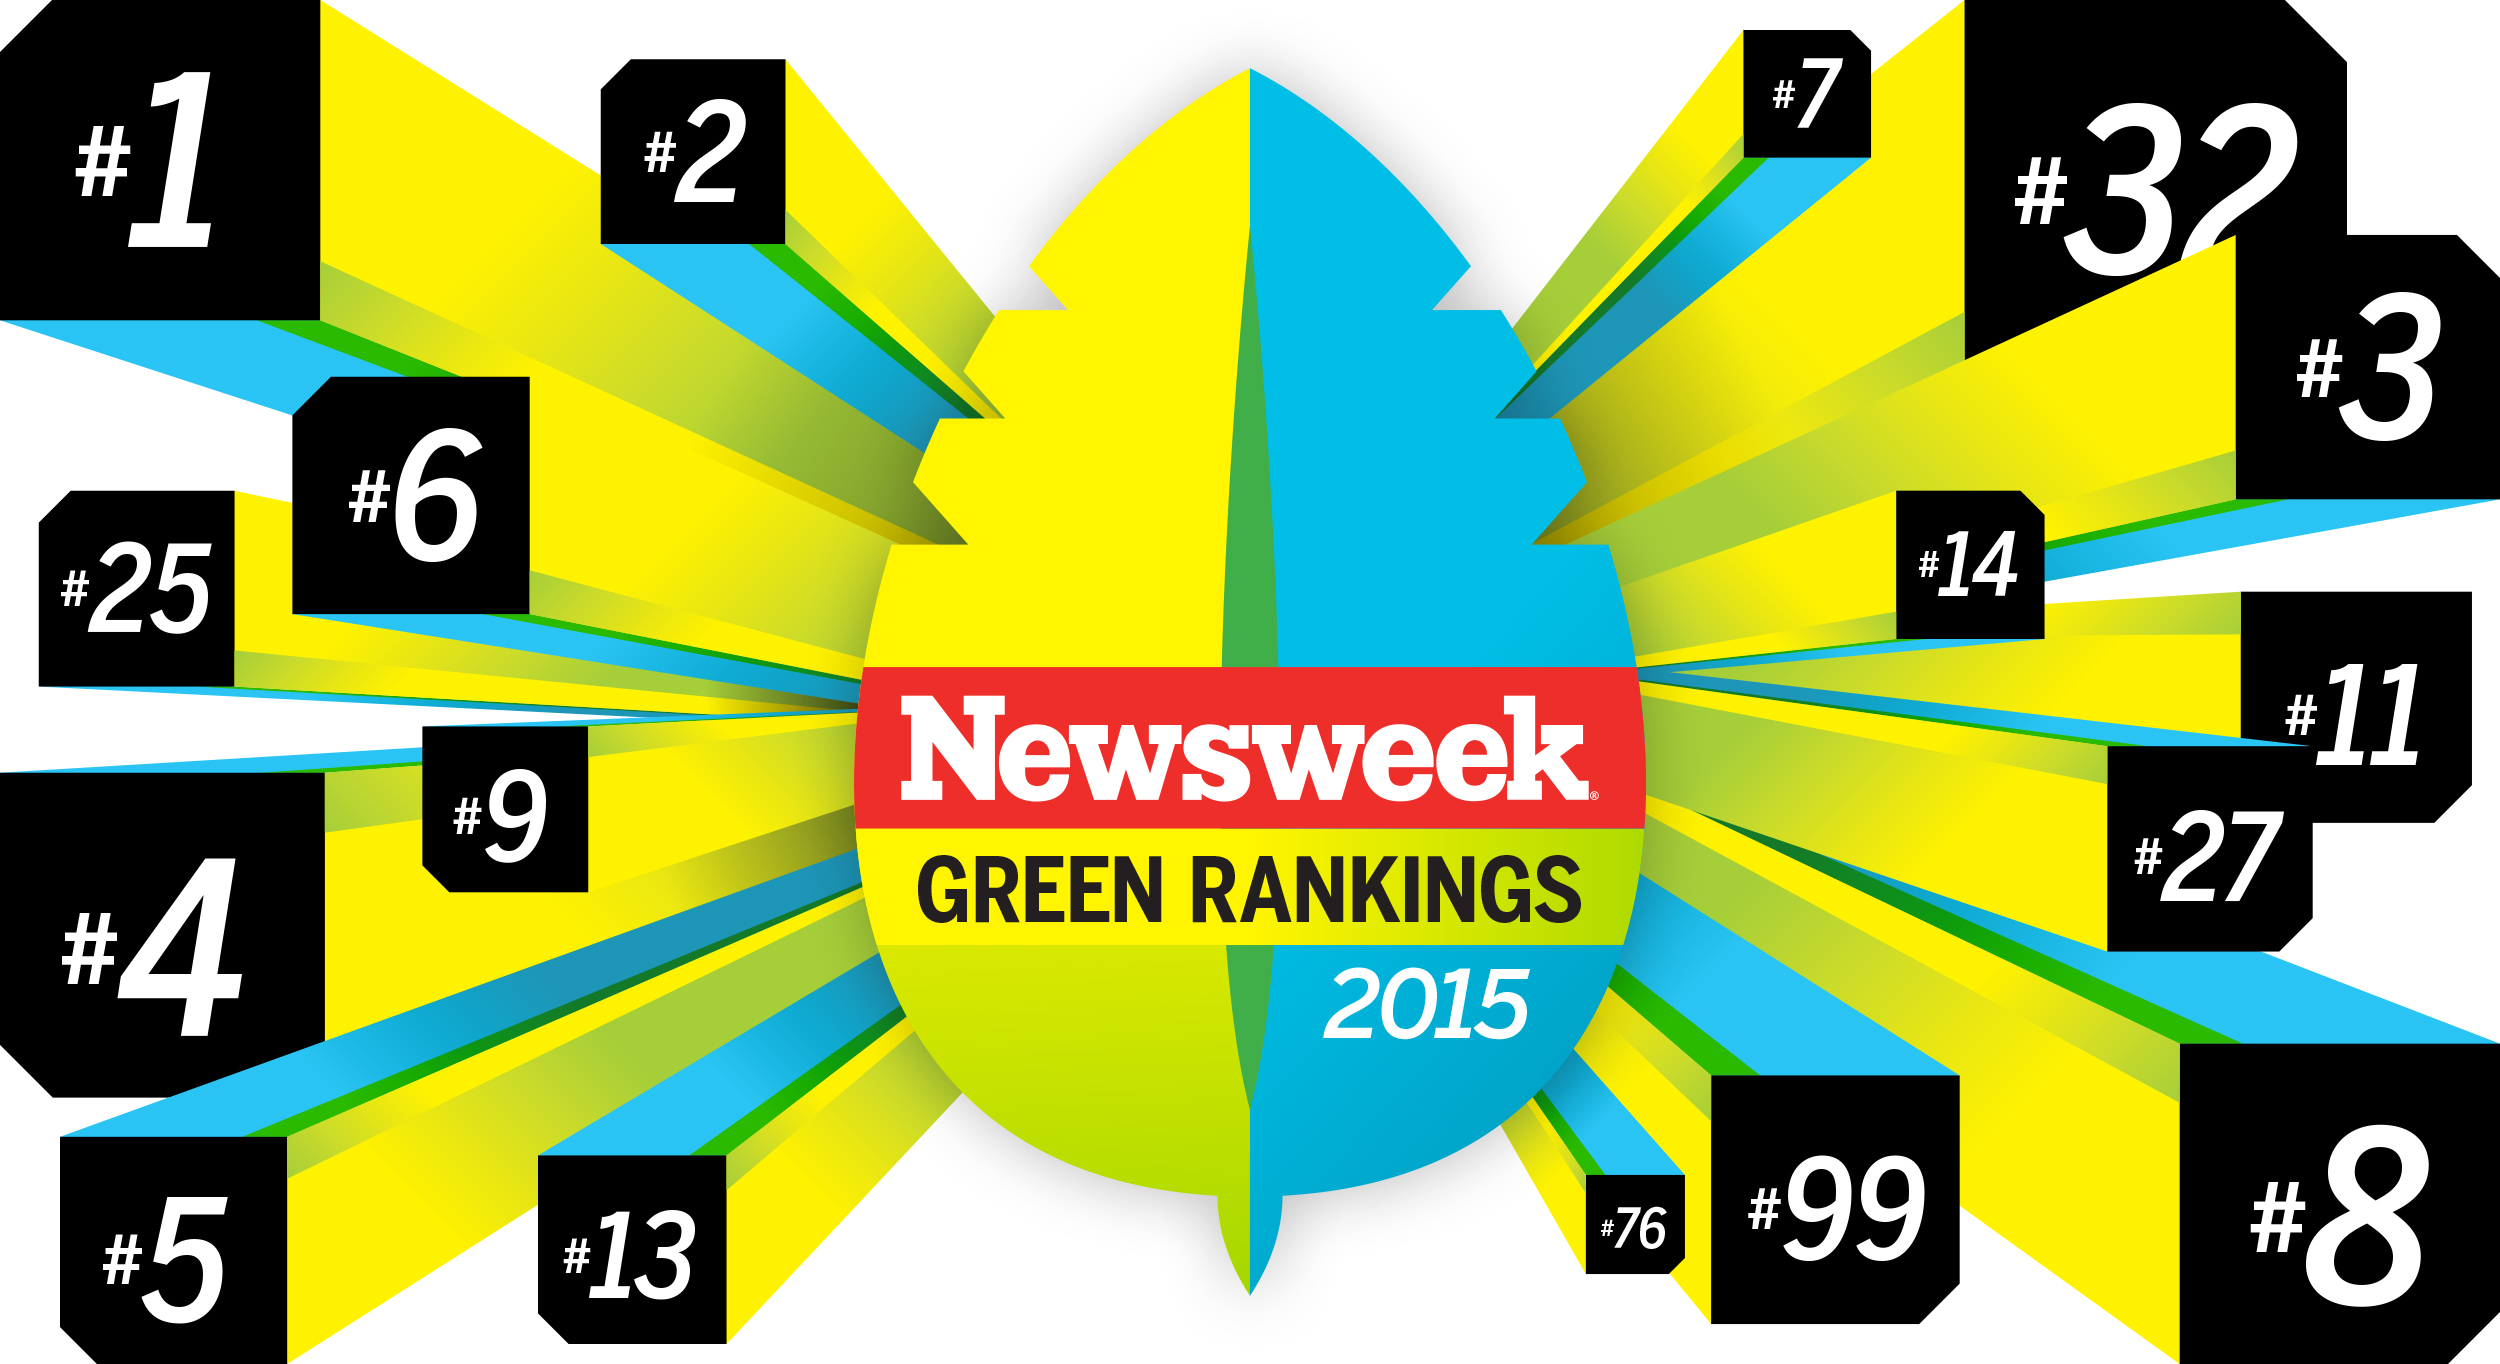 Newsweek Green Rankings 2015